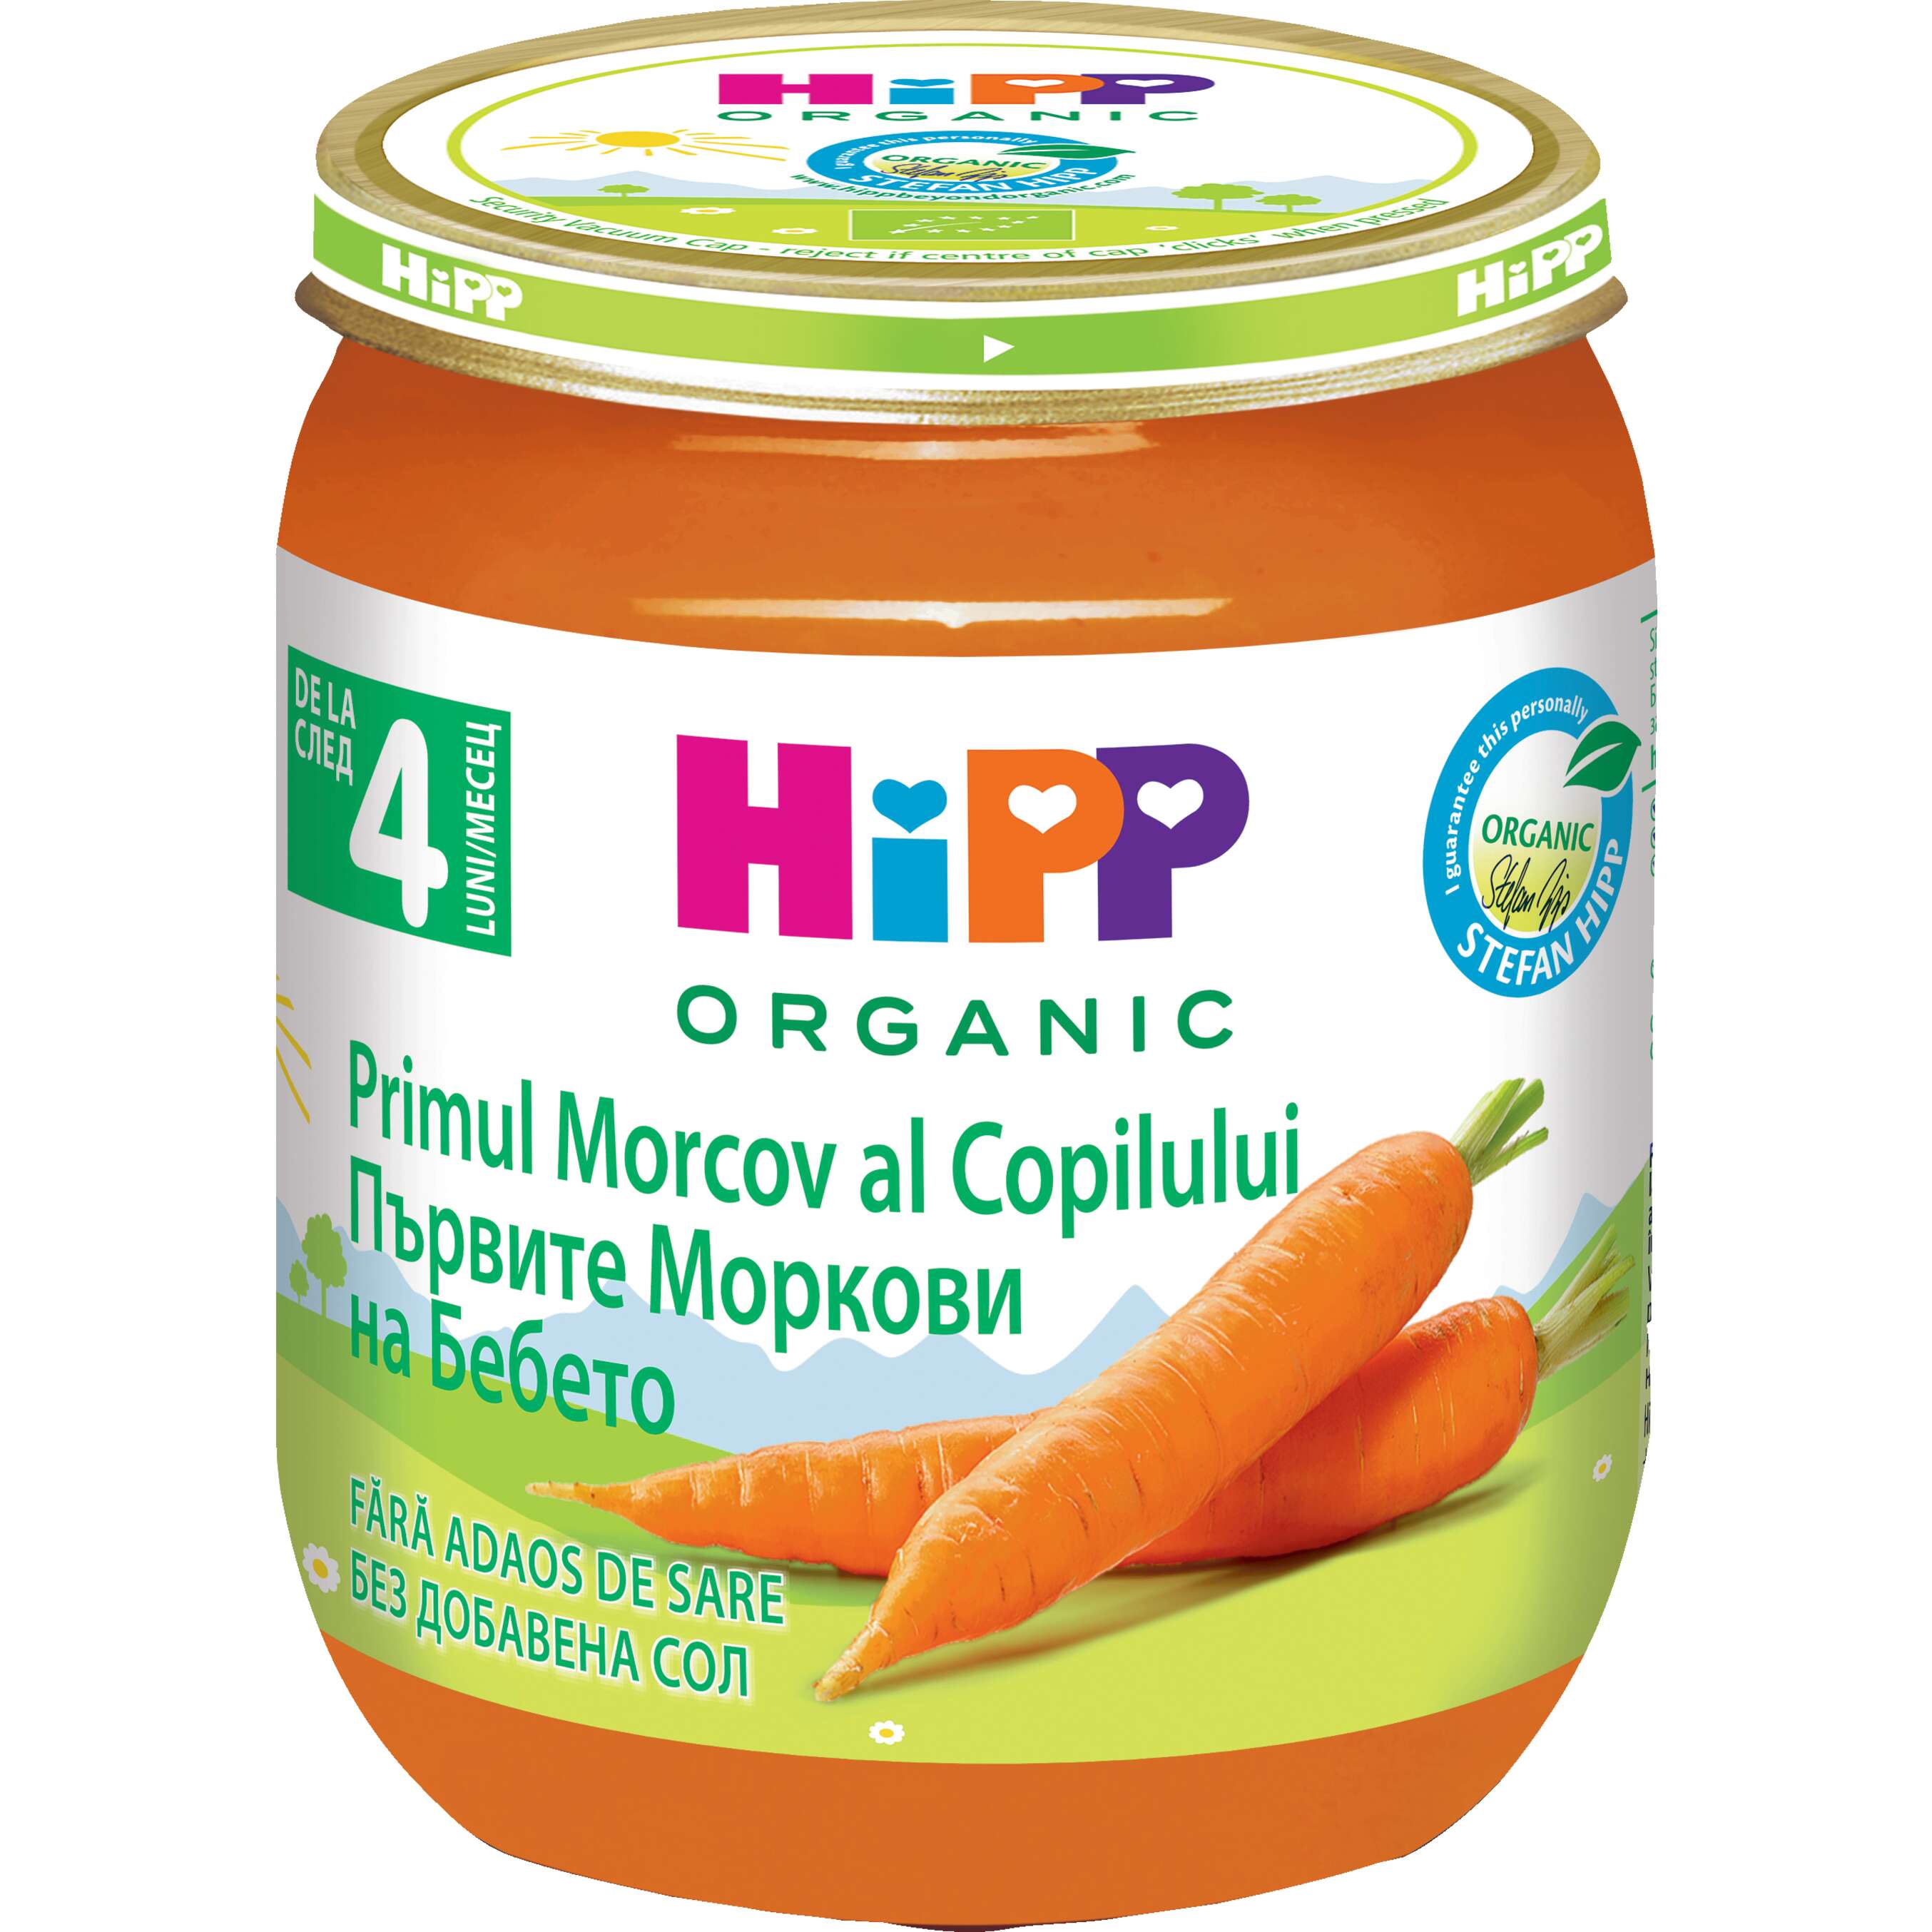 Изображение за продукта Hipp Био зеленчуково пюре различни видове